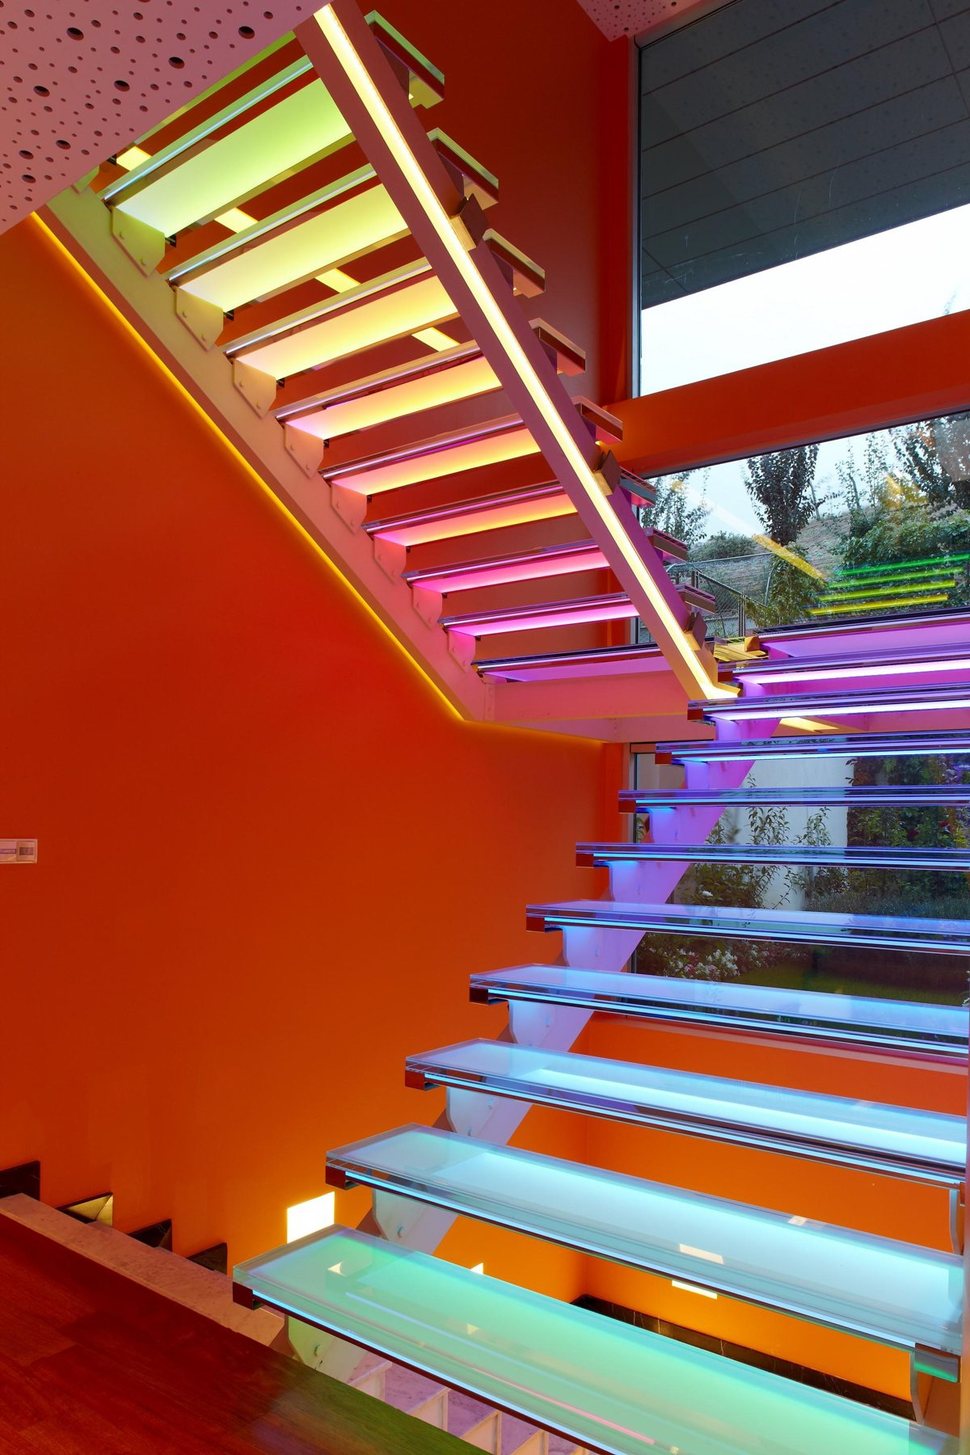 ultramodern-house-with-vibrant-lighting-design-focus-14-stairs-rainbow.jpg